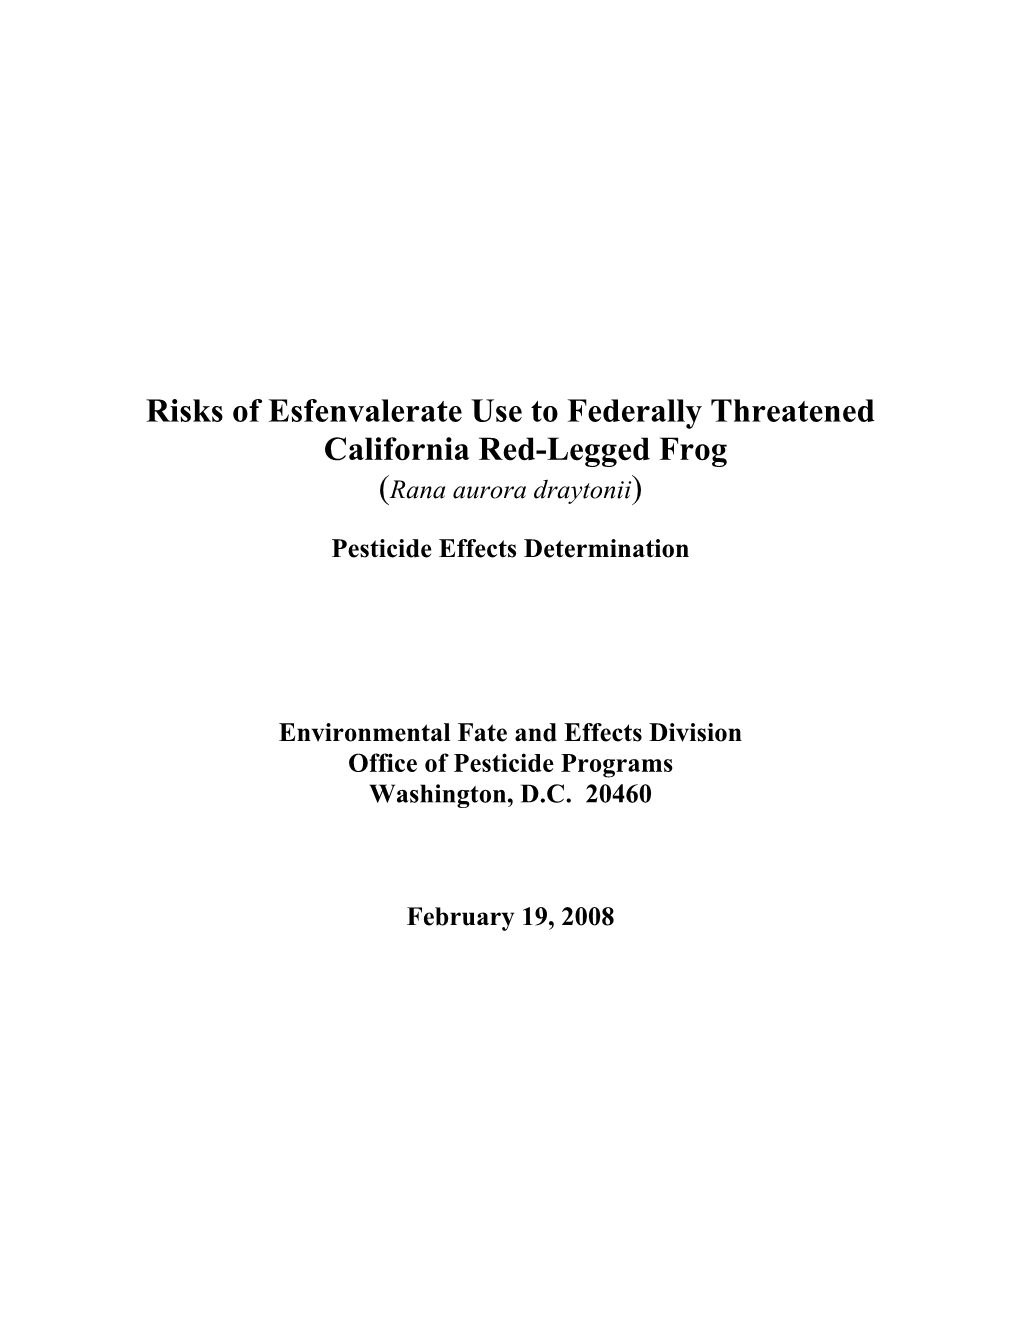 Risks of Esfenvalerate Use to Federally Threatened California Red-Legged Frog (Rana Aurora Draytonii)